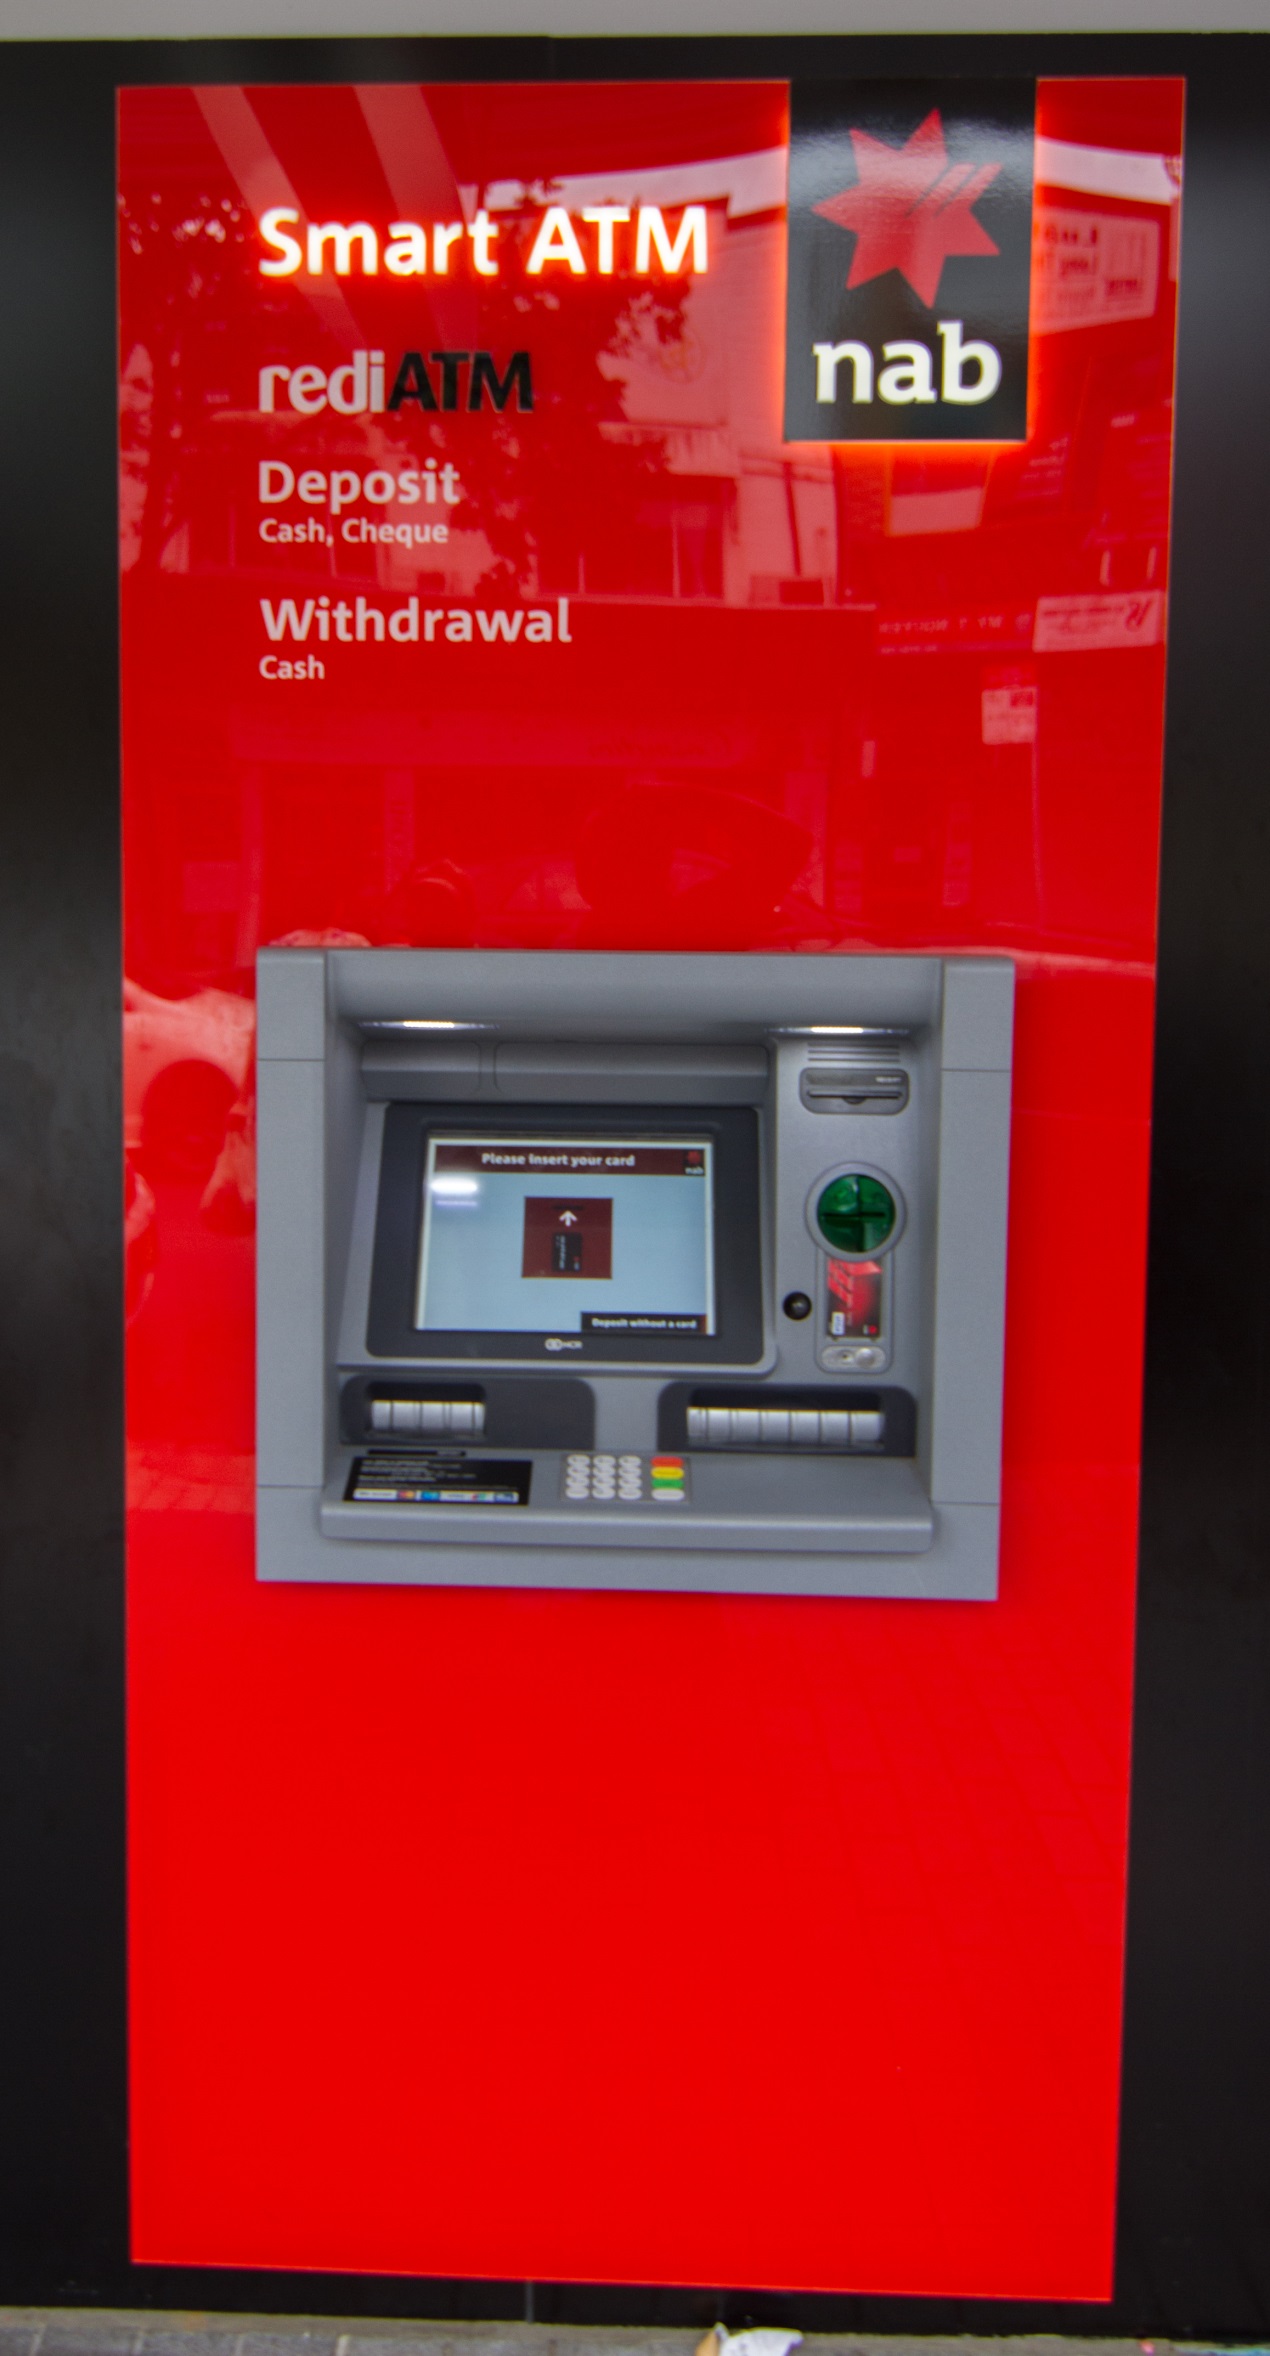 https://upload.wikimedia.org/wikipedia/commons/c/c9/NAB_bank_ATM.jpg